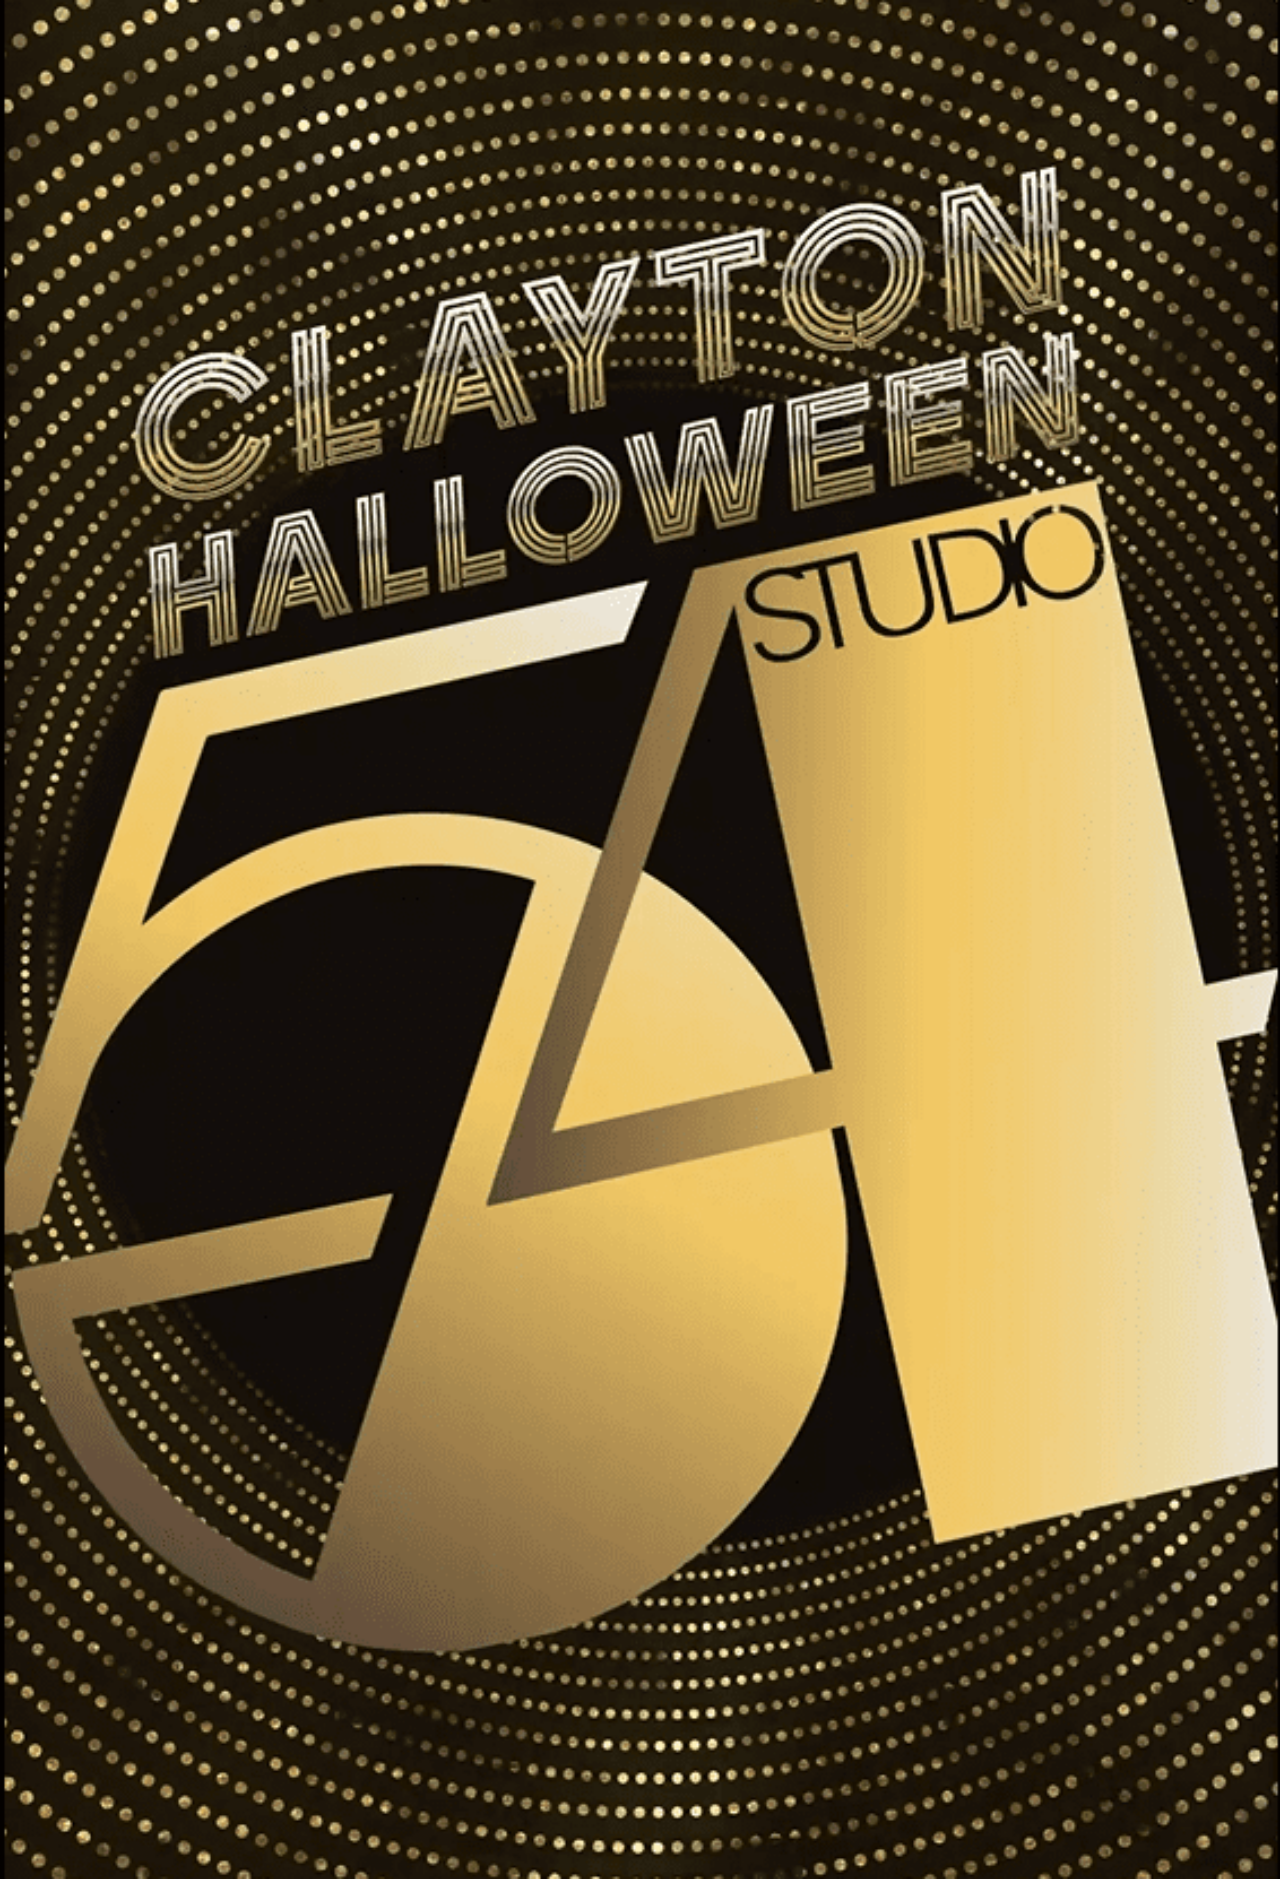 Clayton Halloween Studio 54 Flyer in black and gold